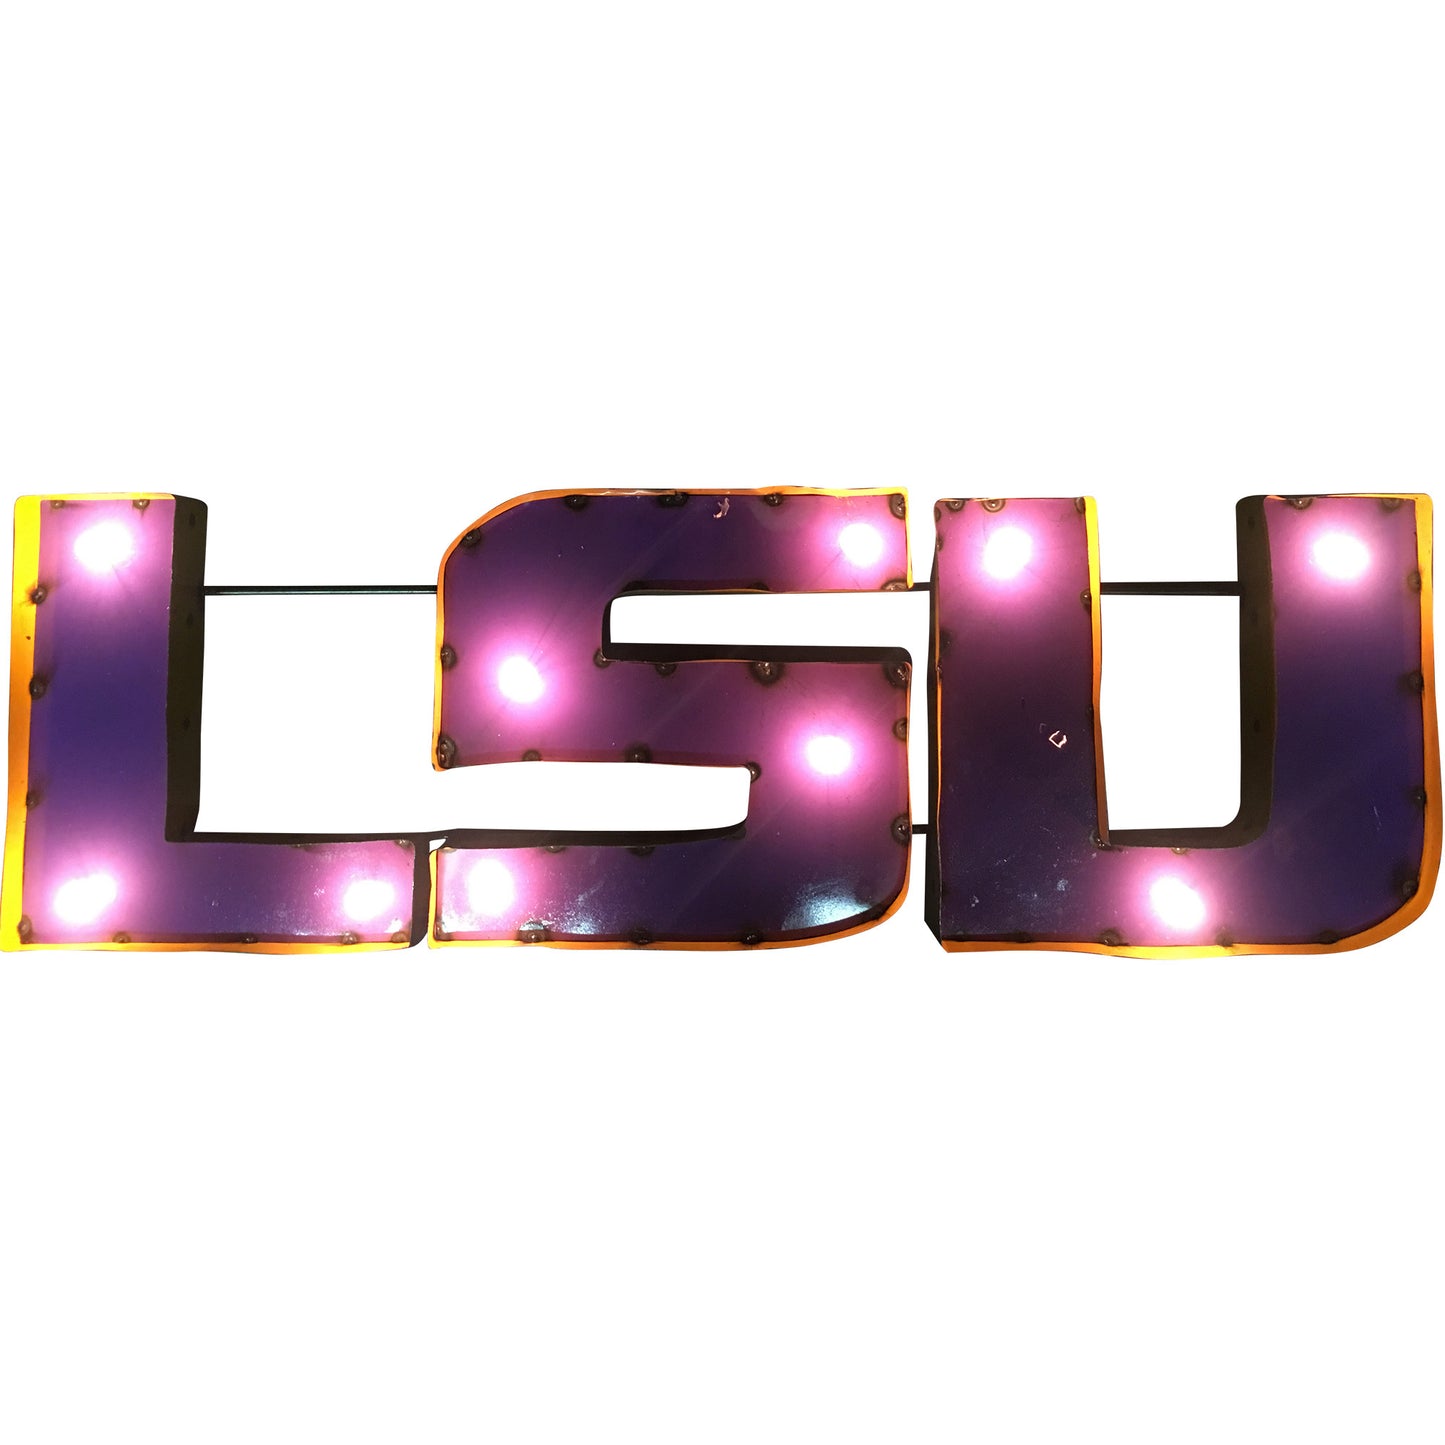 Louisiana State University "LSU" Logo Lighted Recycled Metal Wall Decor